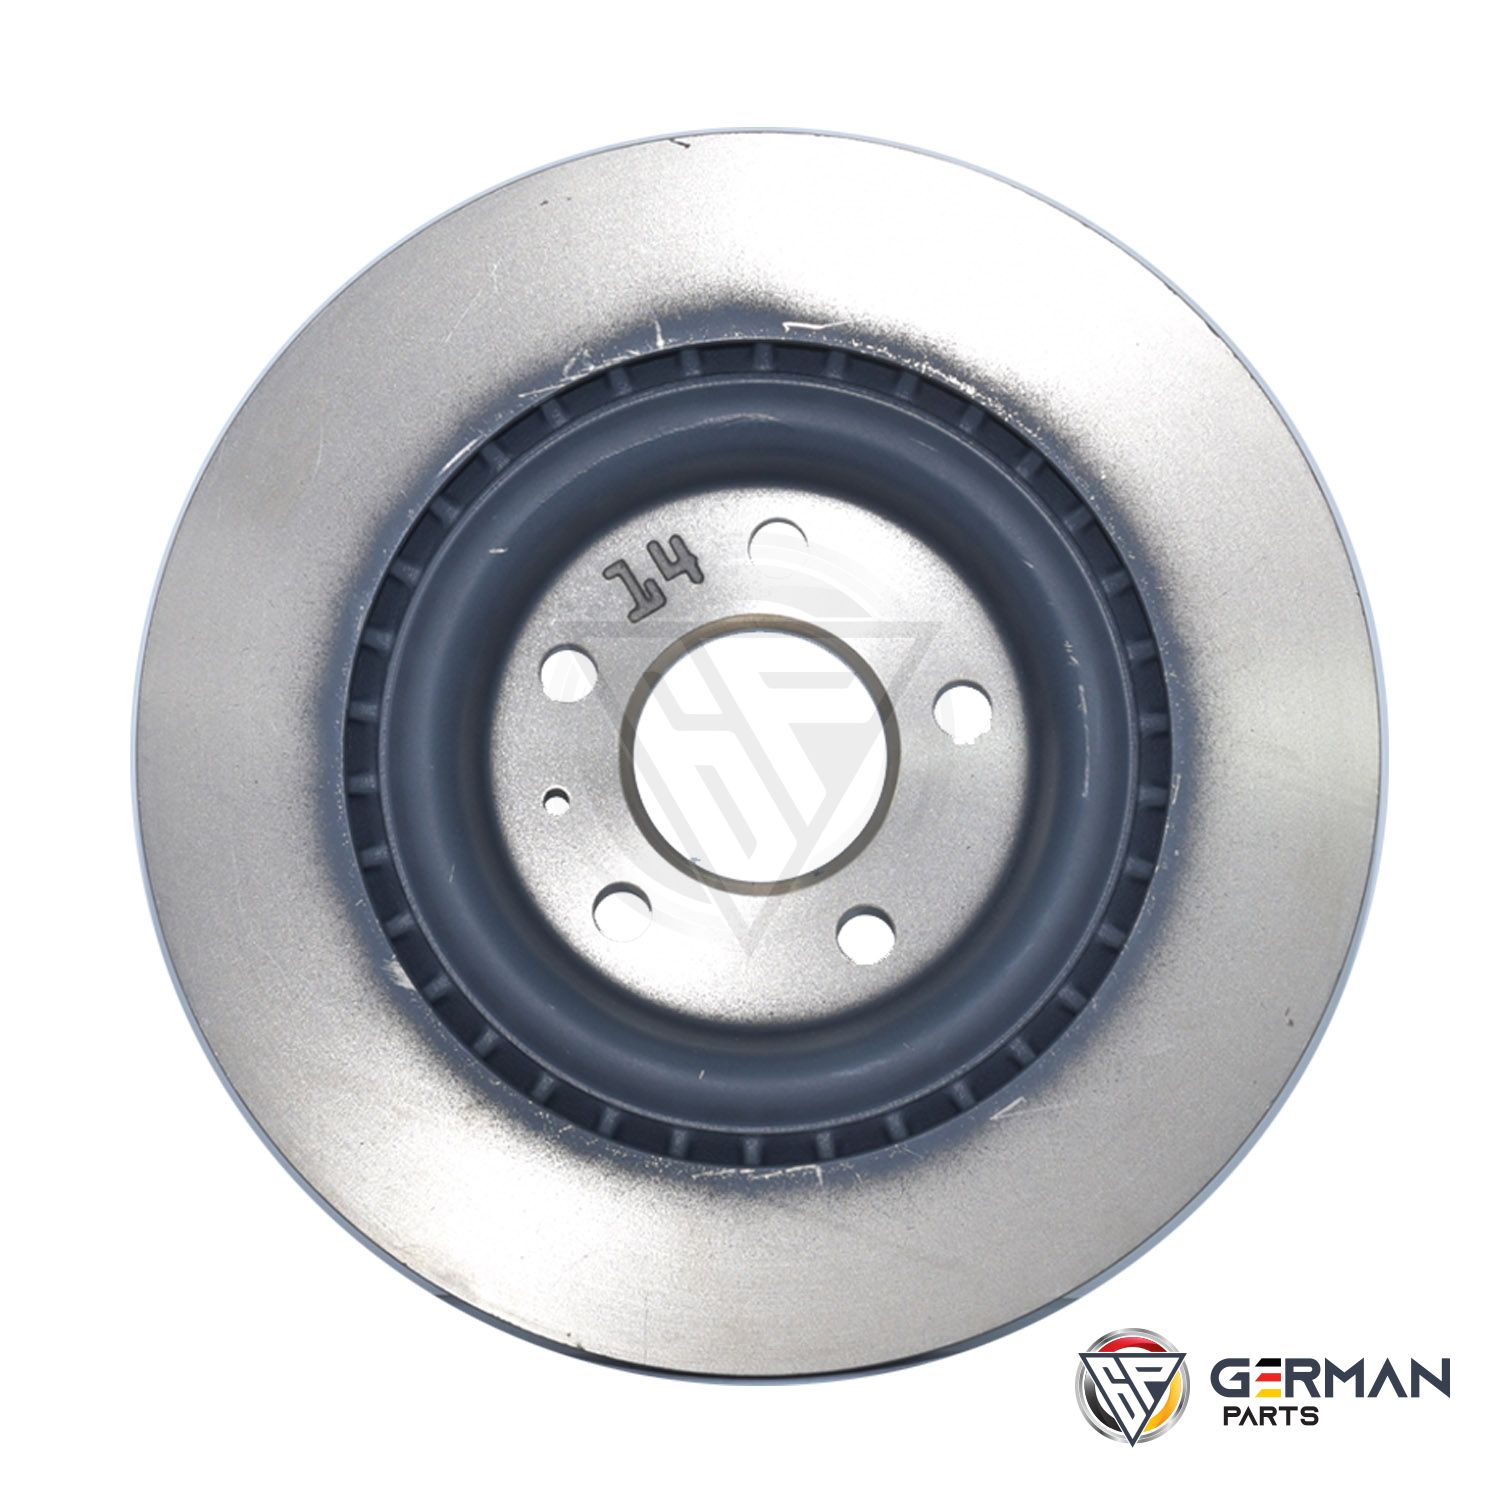 Buy Audi Volkswagen Rear Brake Disc 4H0615601H - German Parts